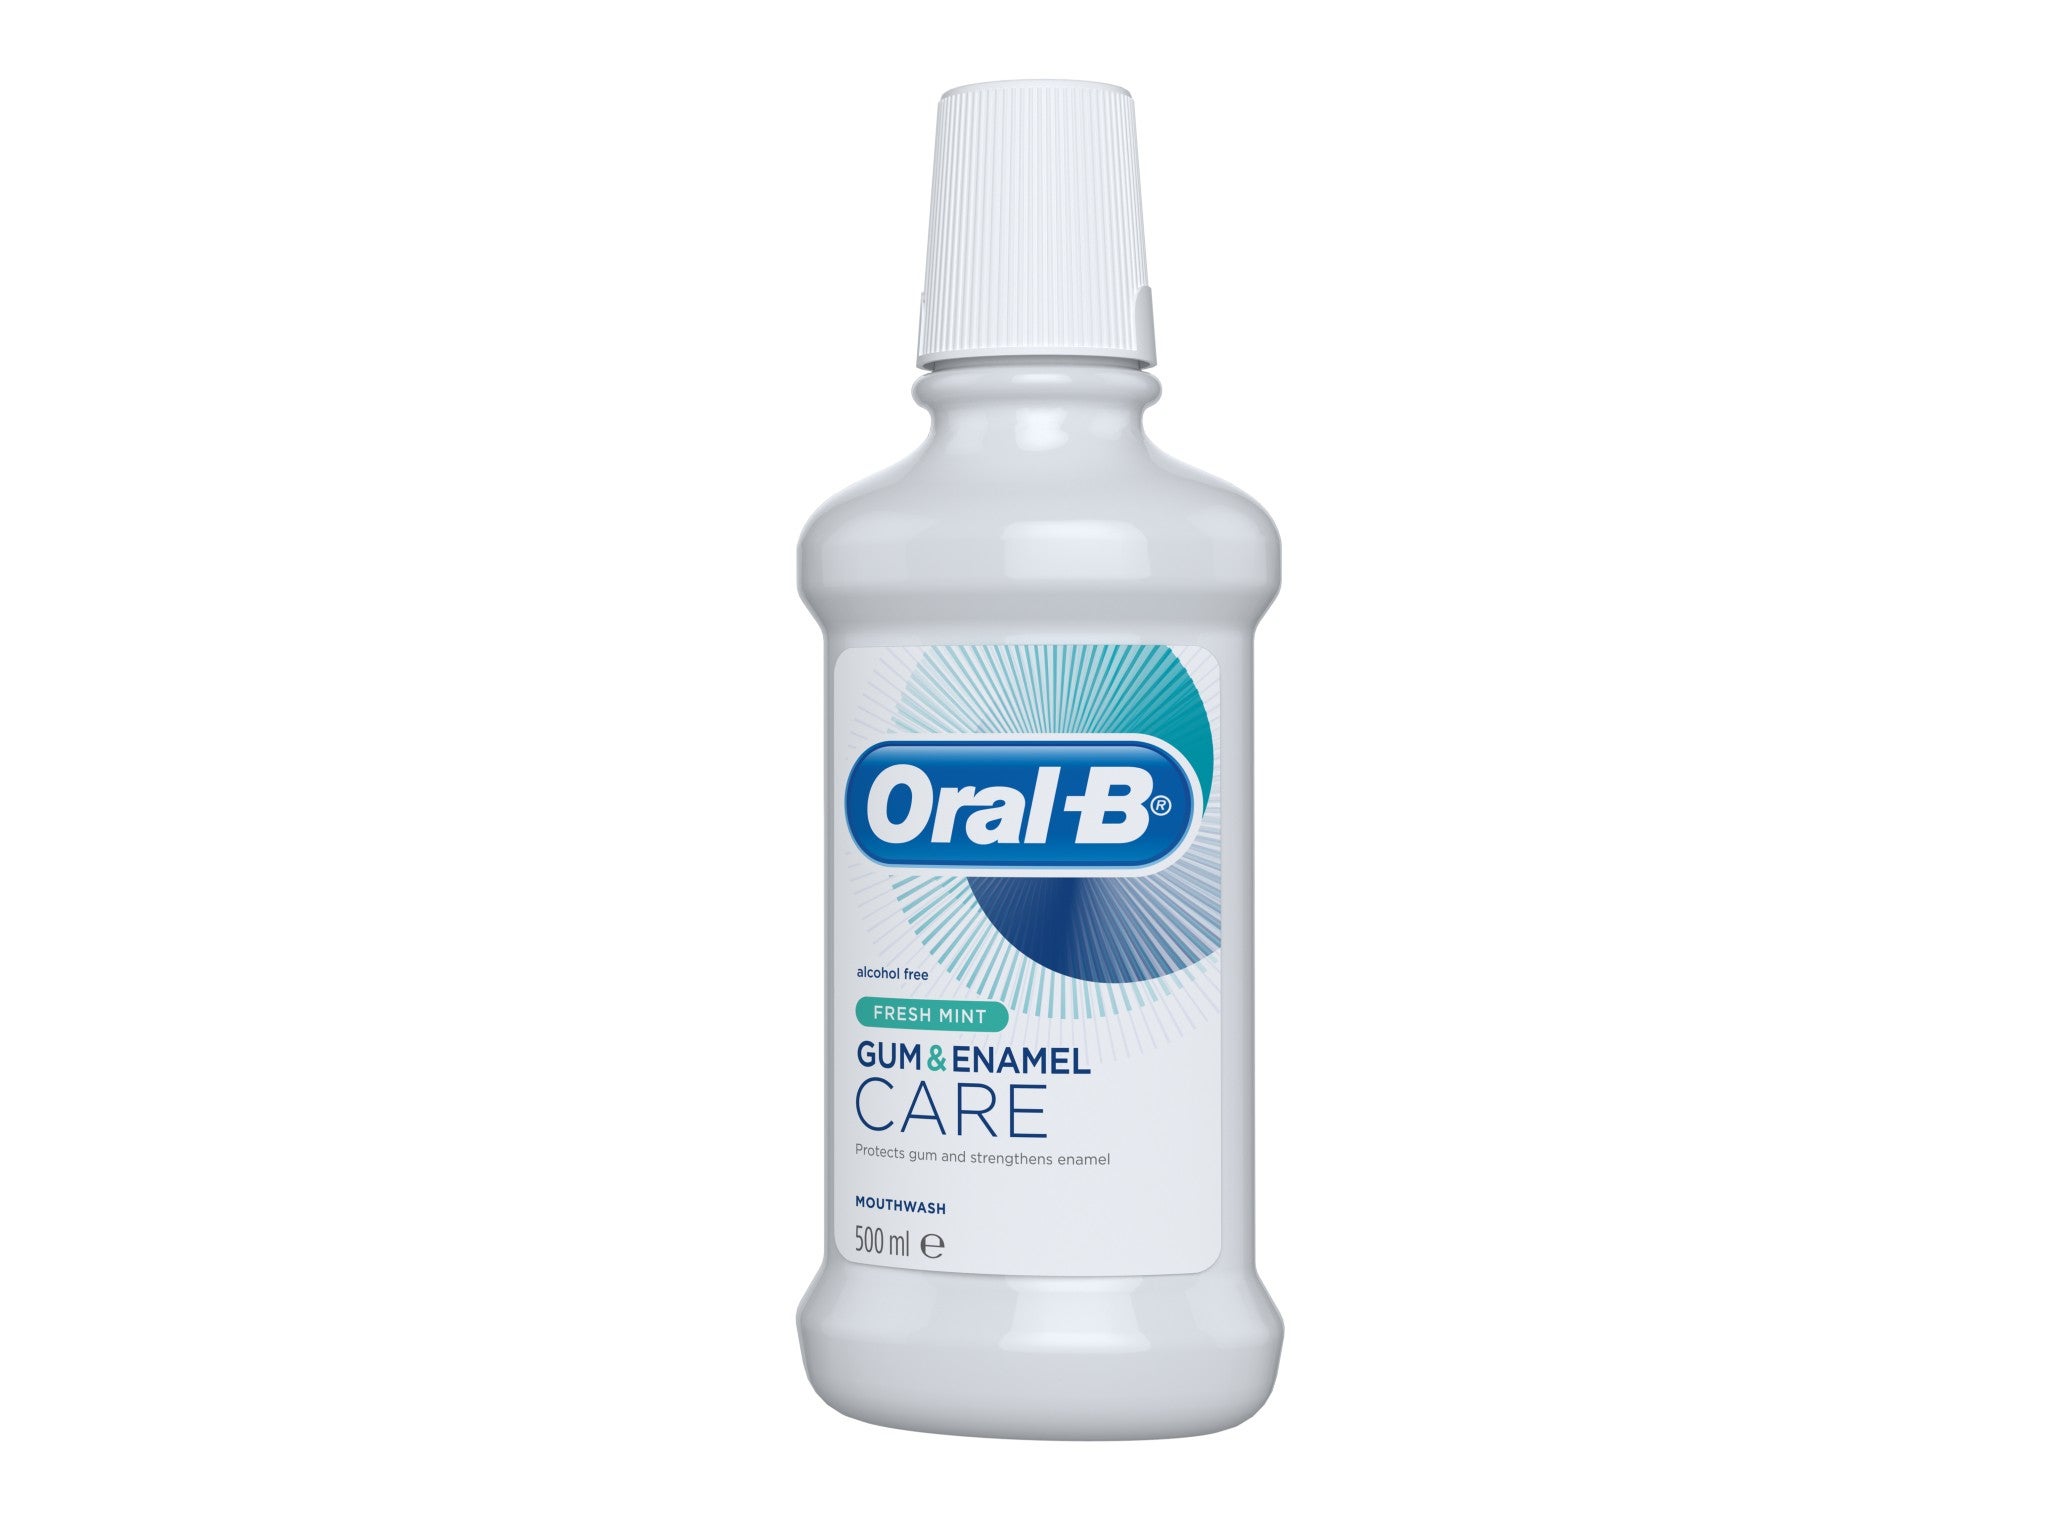 Oral-B gum and enamel care fresh mint mouthwash indybest.jpg